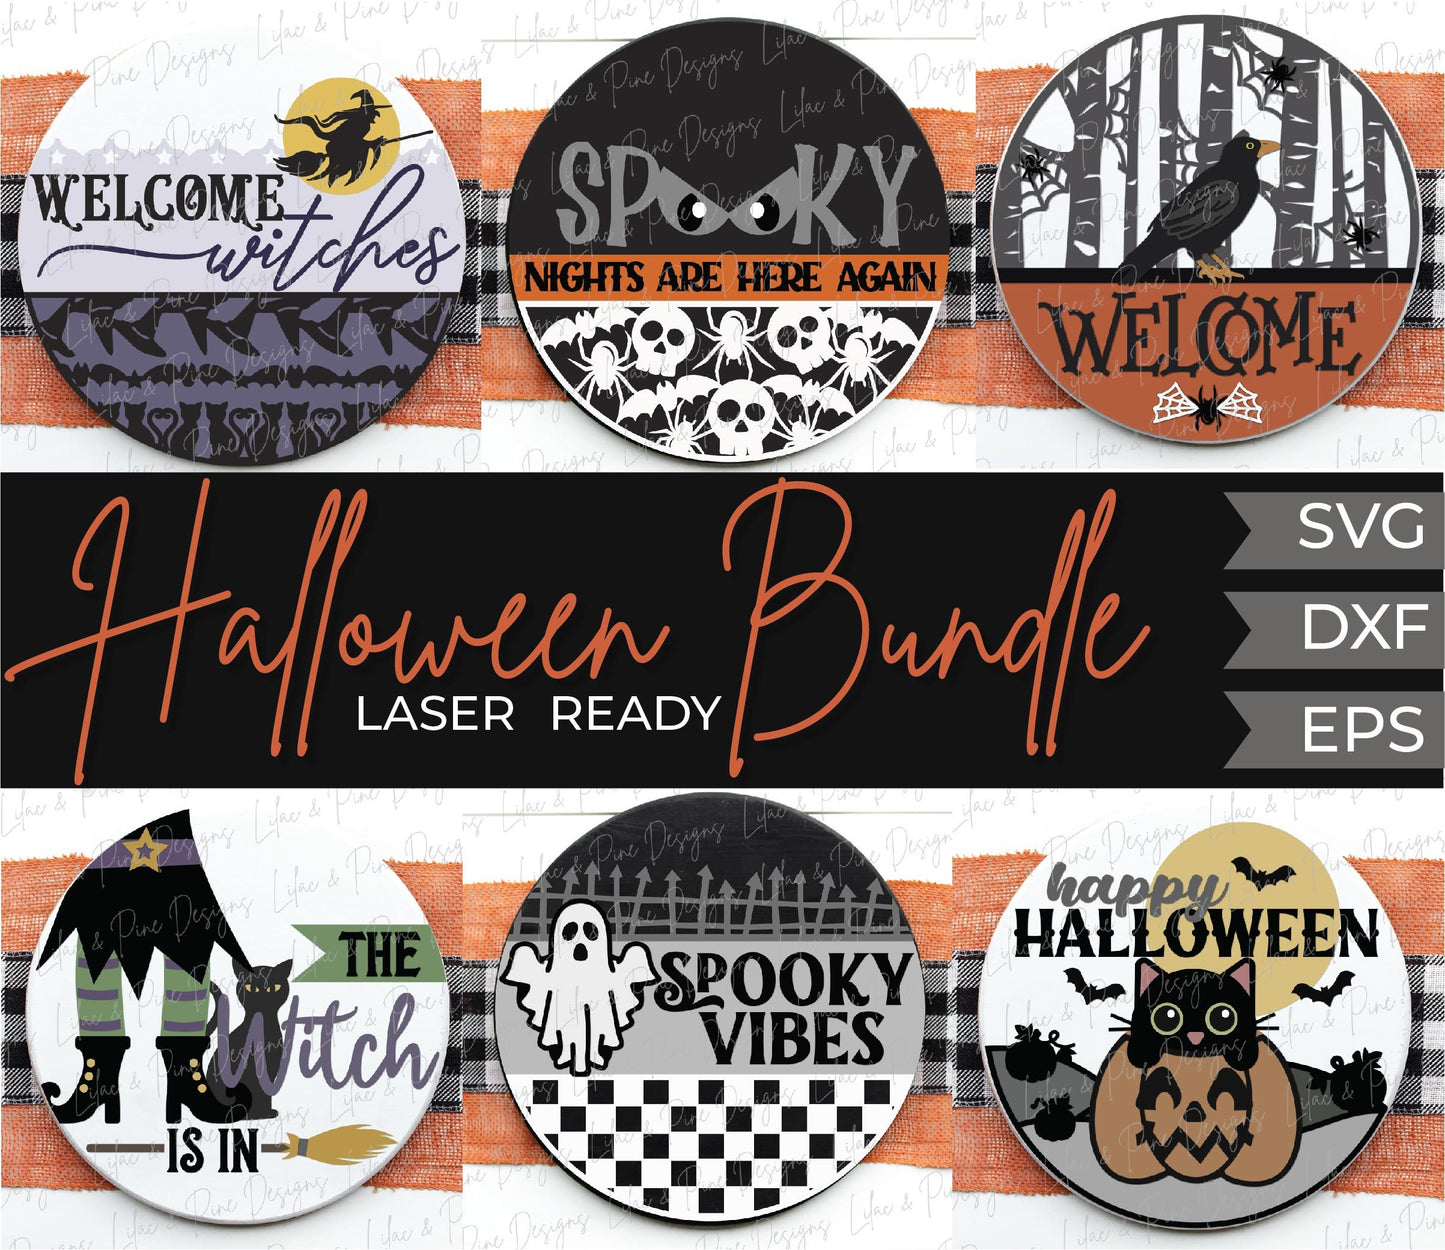 Halloween welcome sign bundle svg, Halloween door hanger SVG, spooky vibes, witch svg, Happy Halloween svg, Glowforge SVG, laser cut file